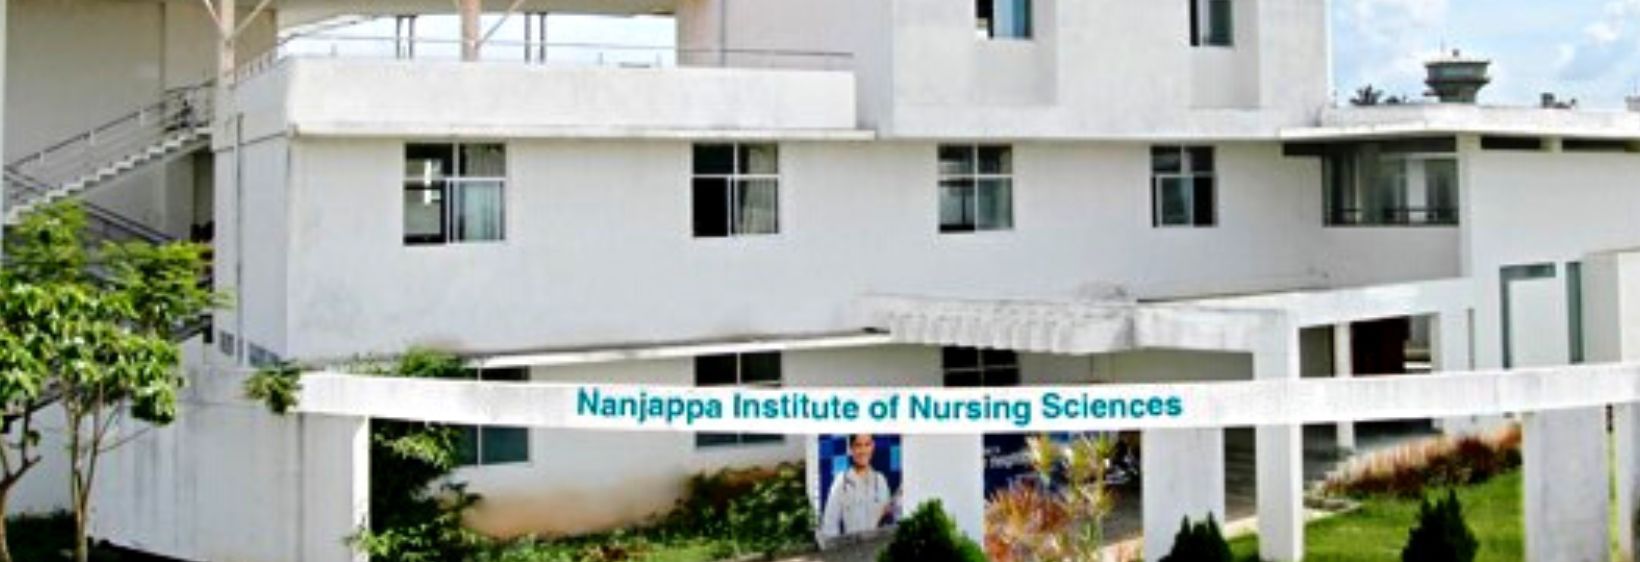 Nanjappa Institute of Nursing Sciences - Shimoga